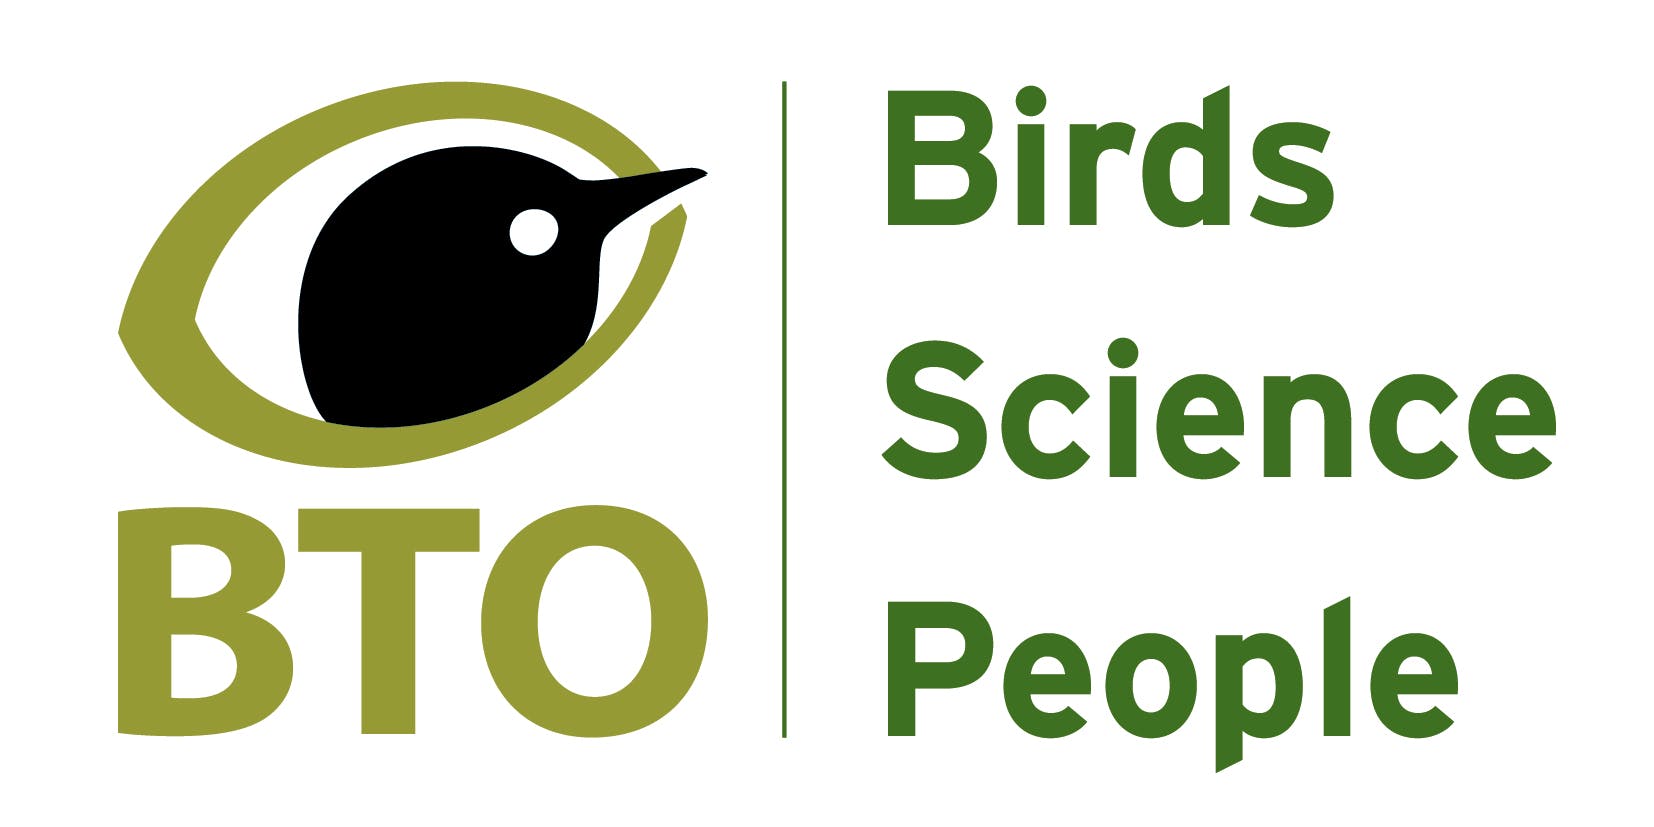 Puffin  BTO - British Trust for Ornithology